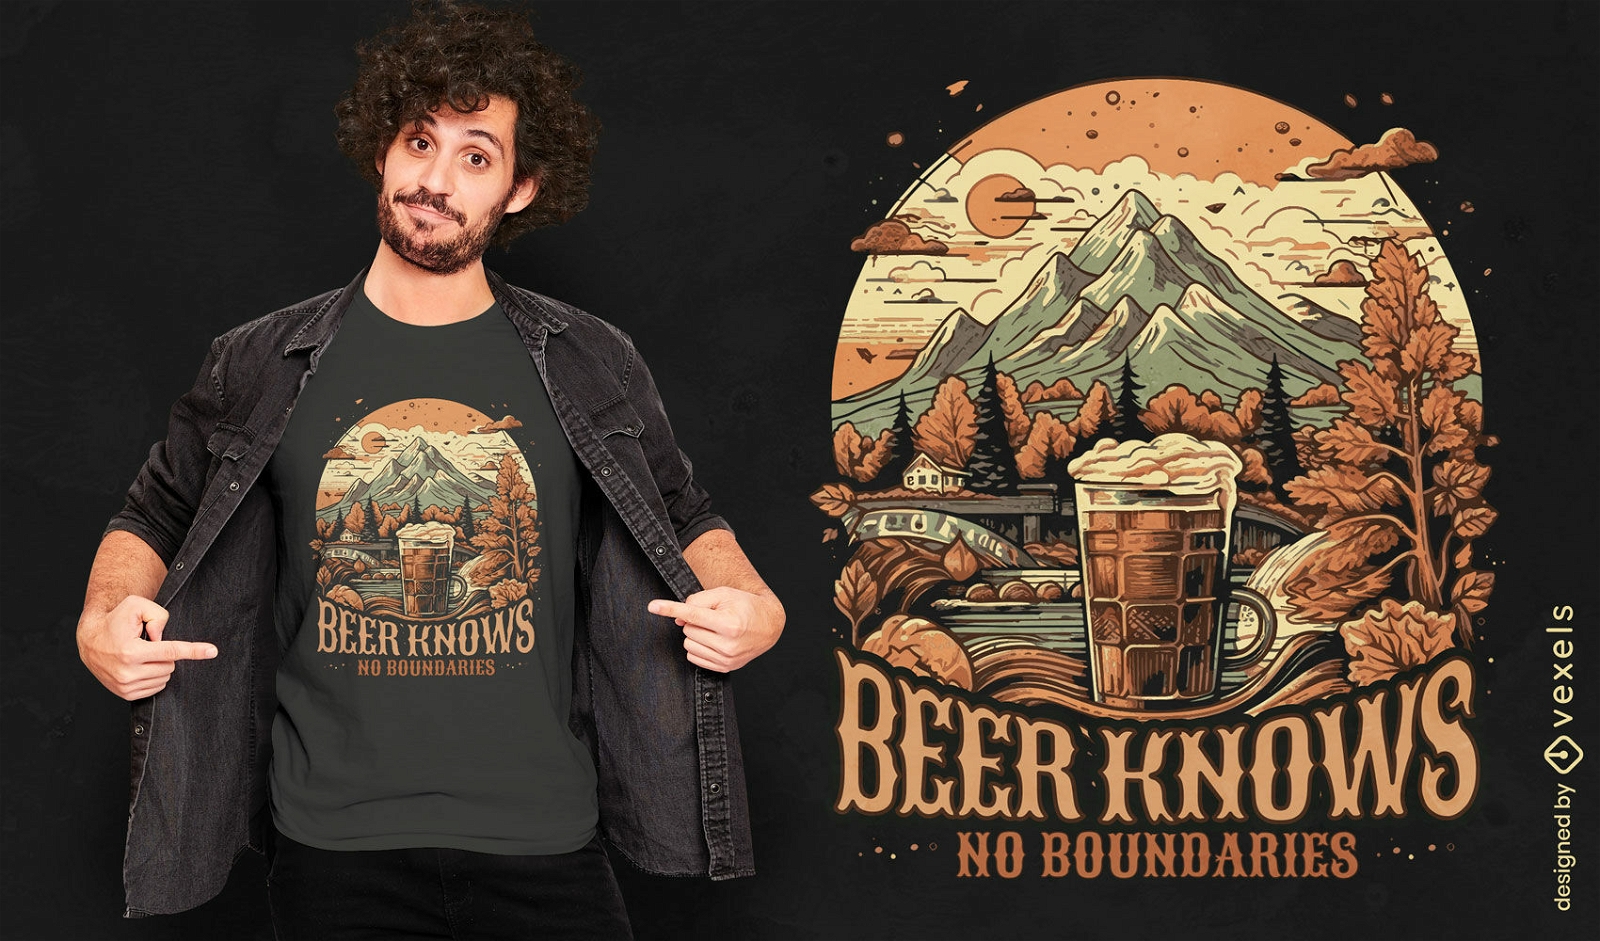 La cerveza no conoce fronteras dise?o de camiseta oktoberfest